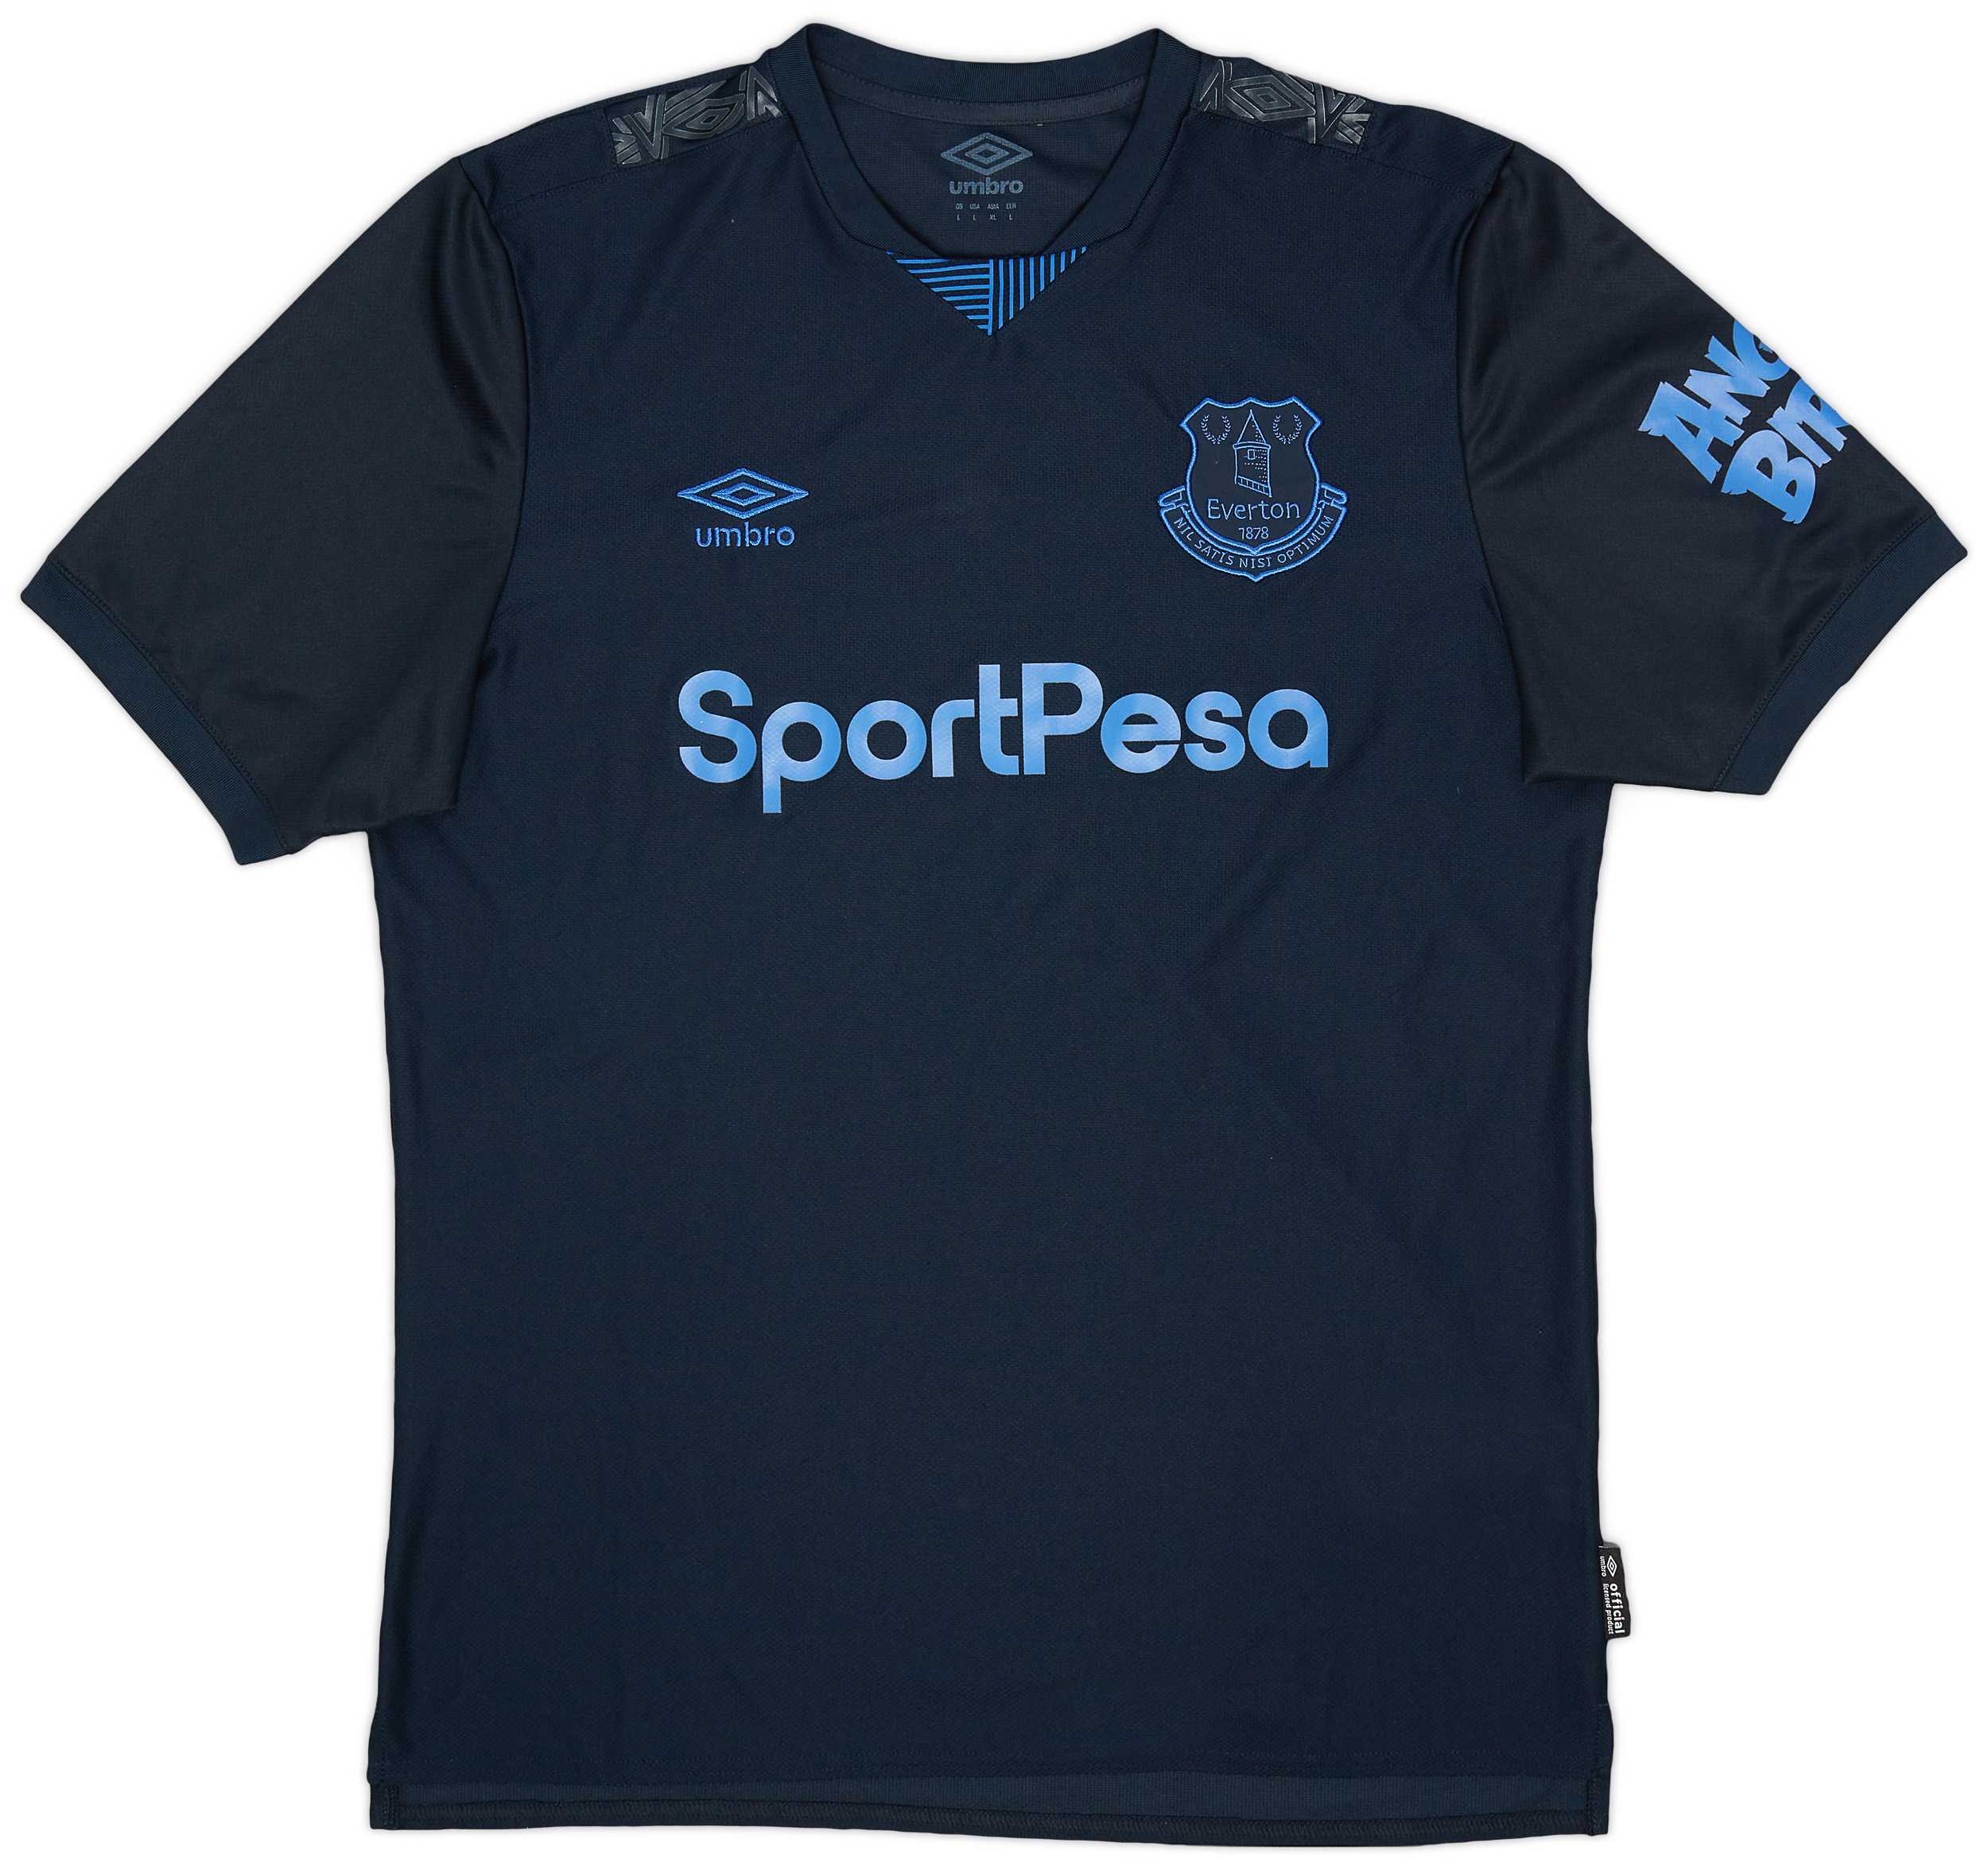 2019-20 Everton Third Shirt - 9/10 - ()